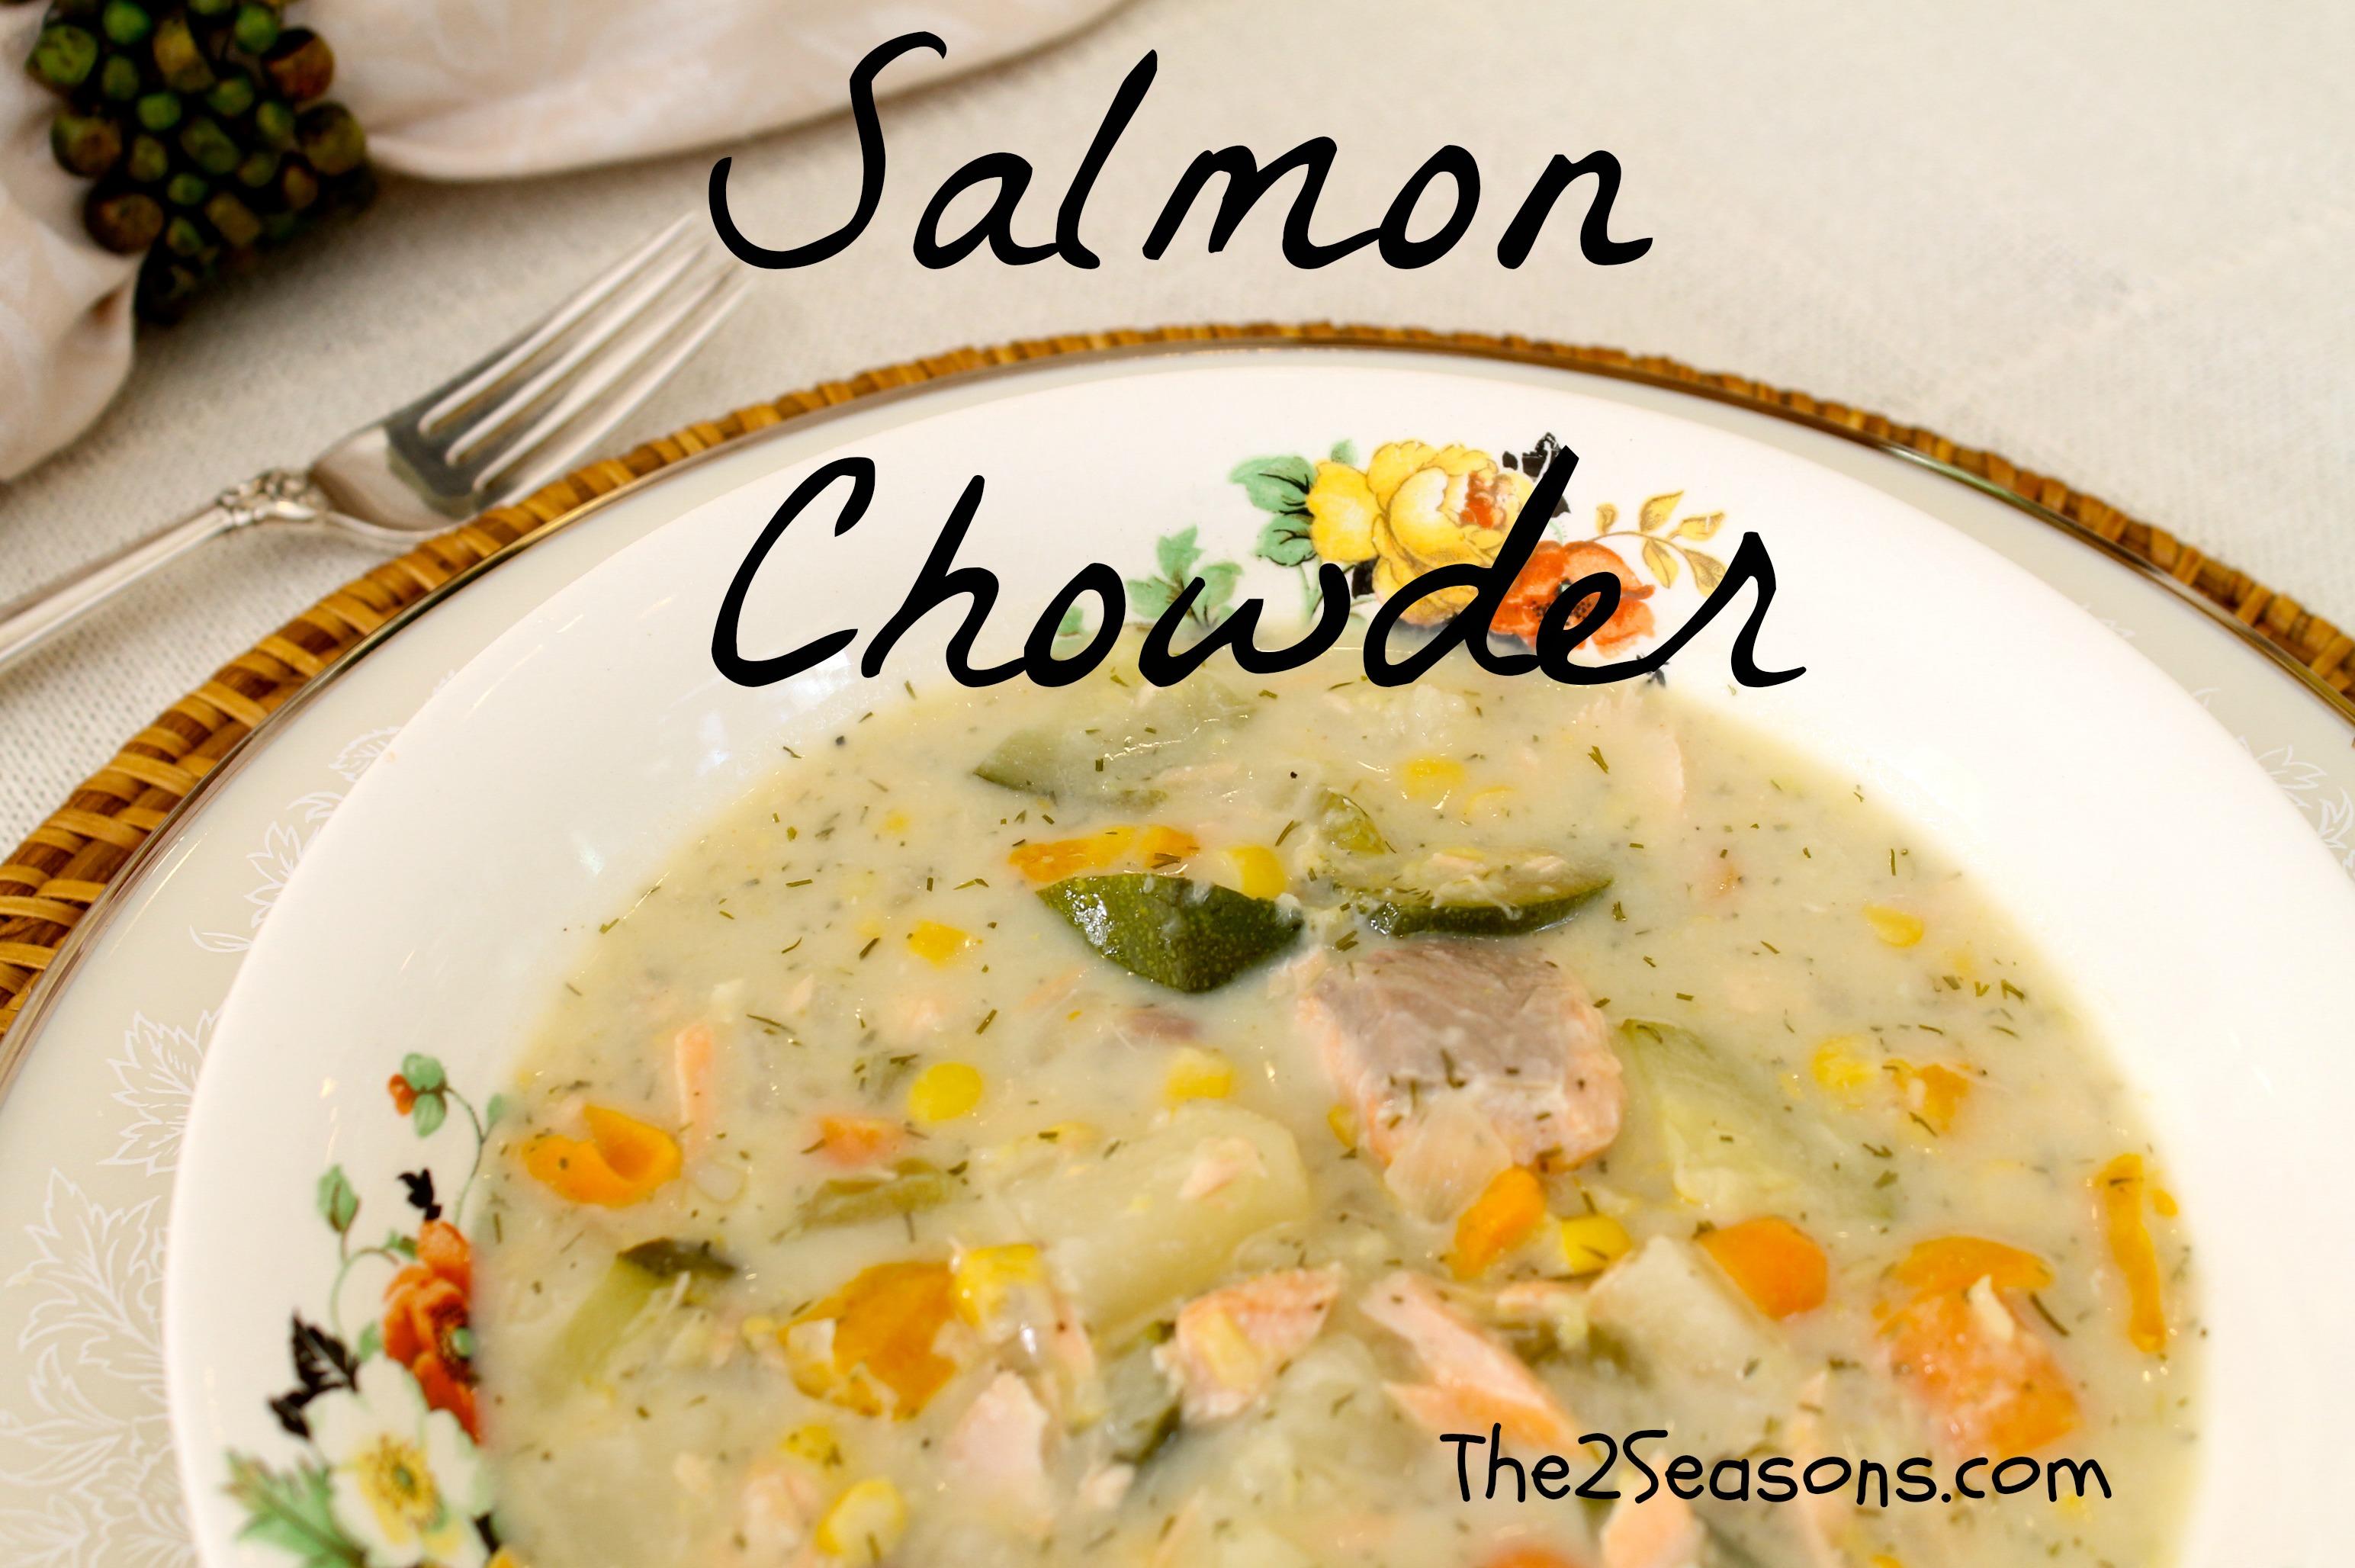 Salmon Chowder - Corn and Crab Chowder